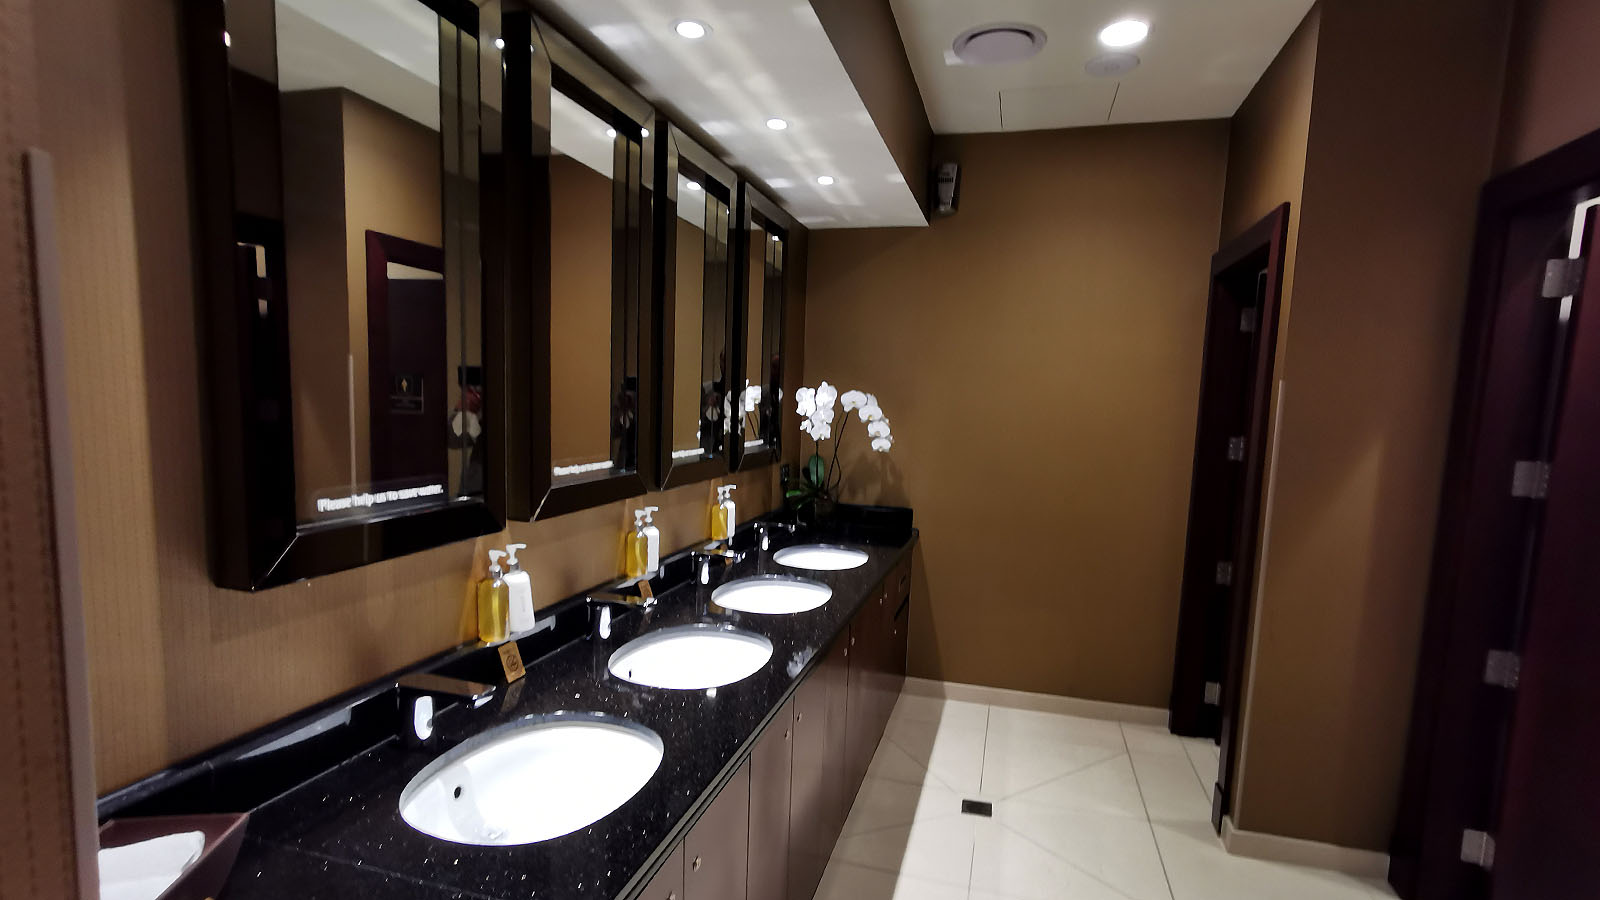 Washroom in the Emirates Lounge, Melbourne